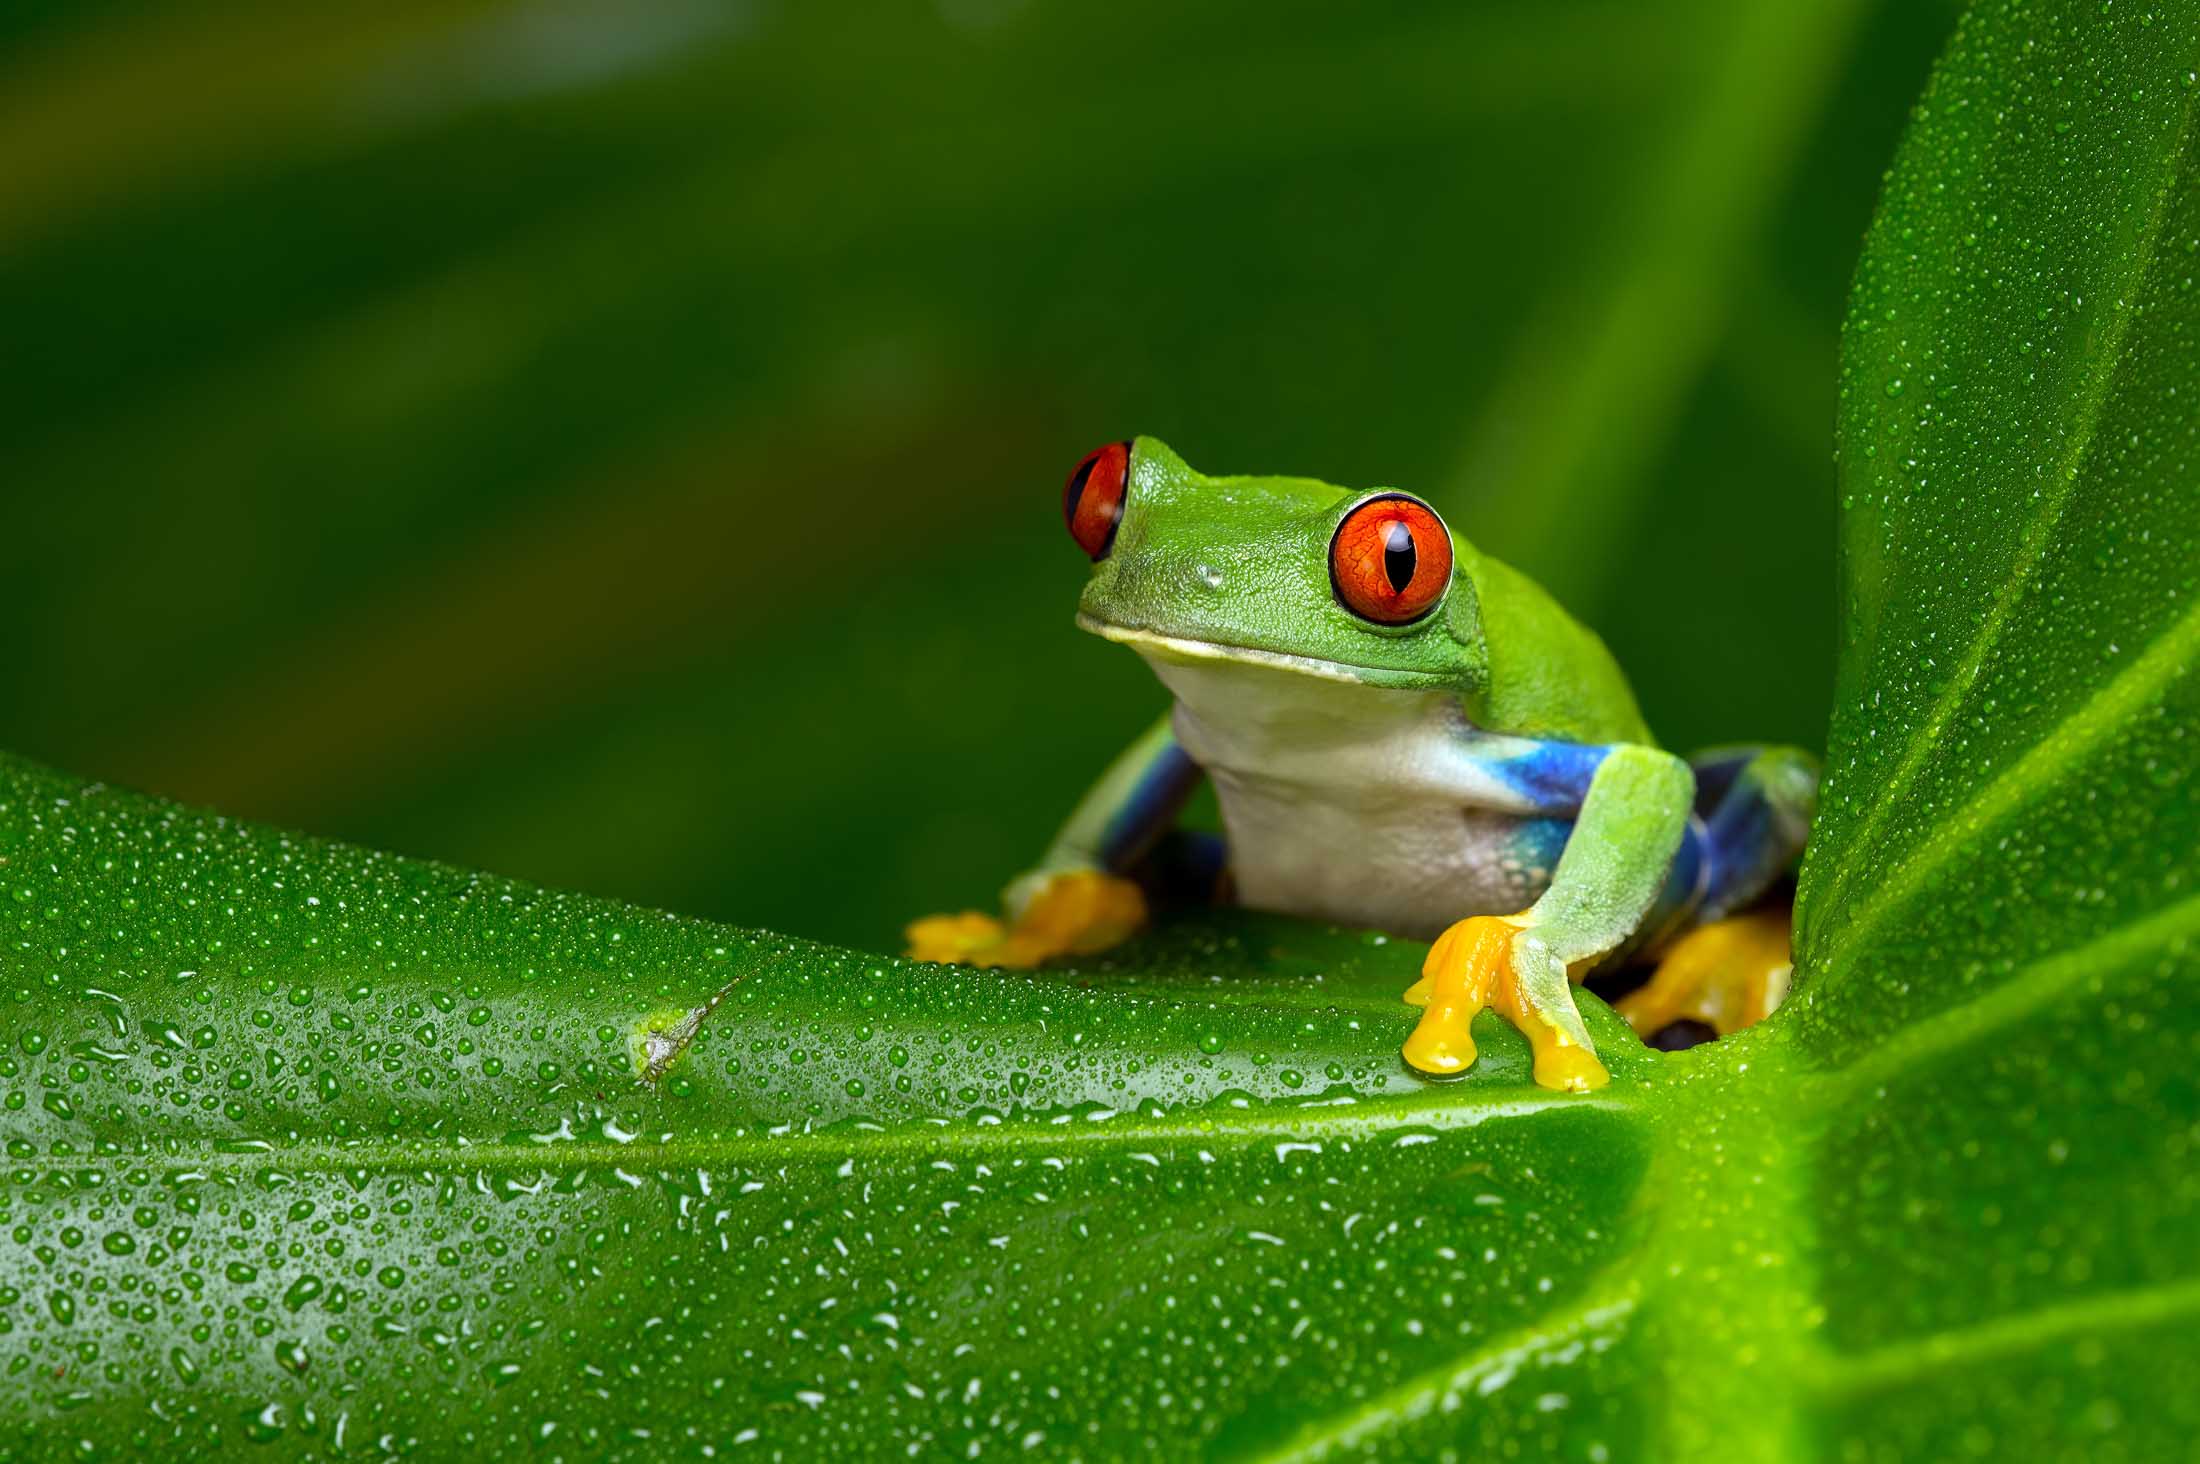 Red-eyed Amazon tree frog